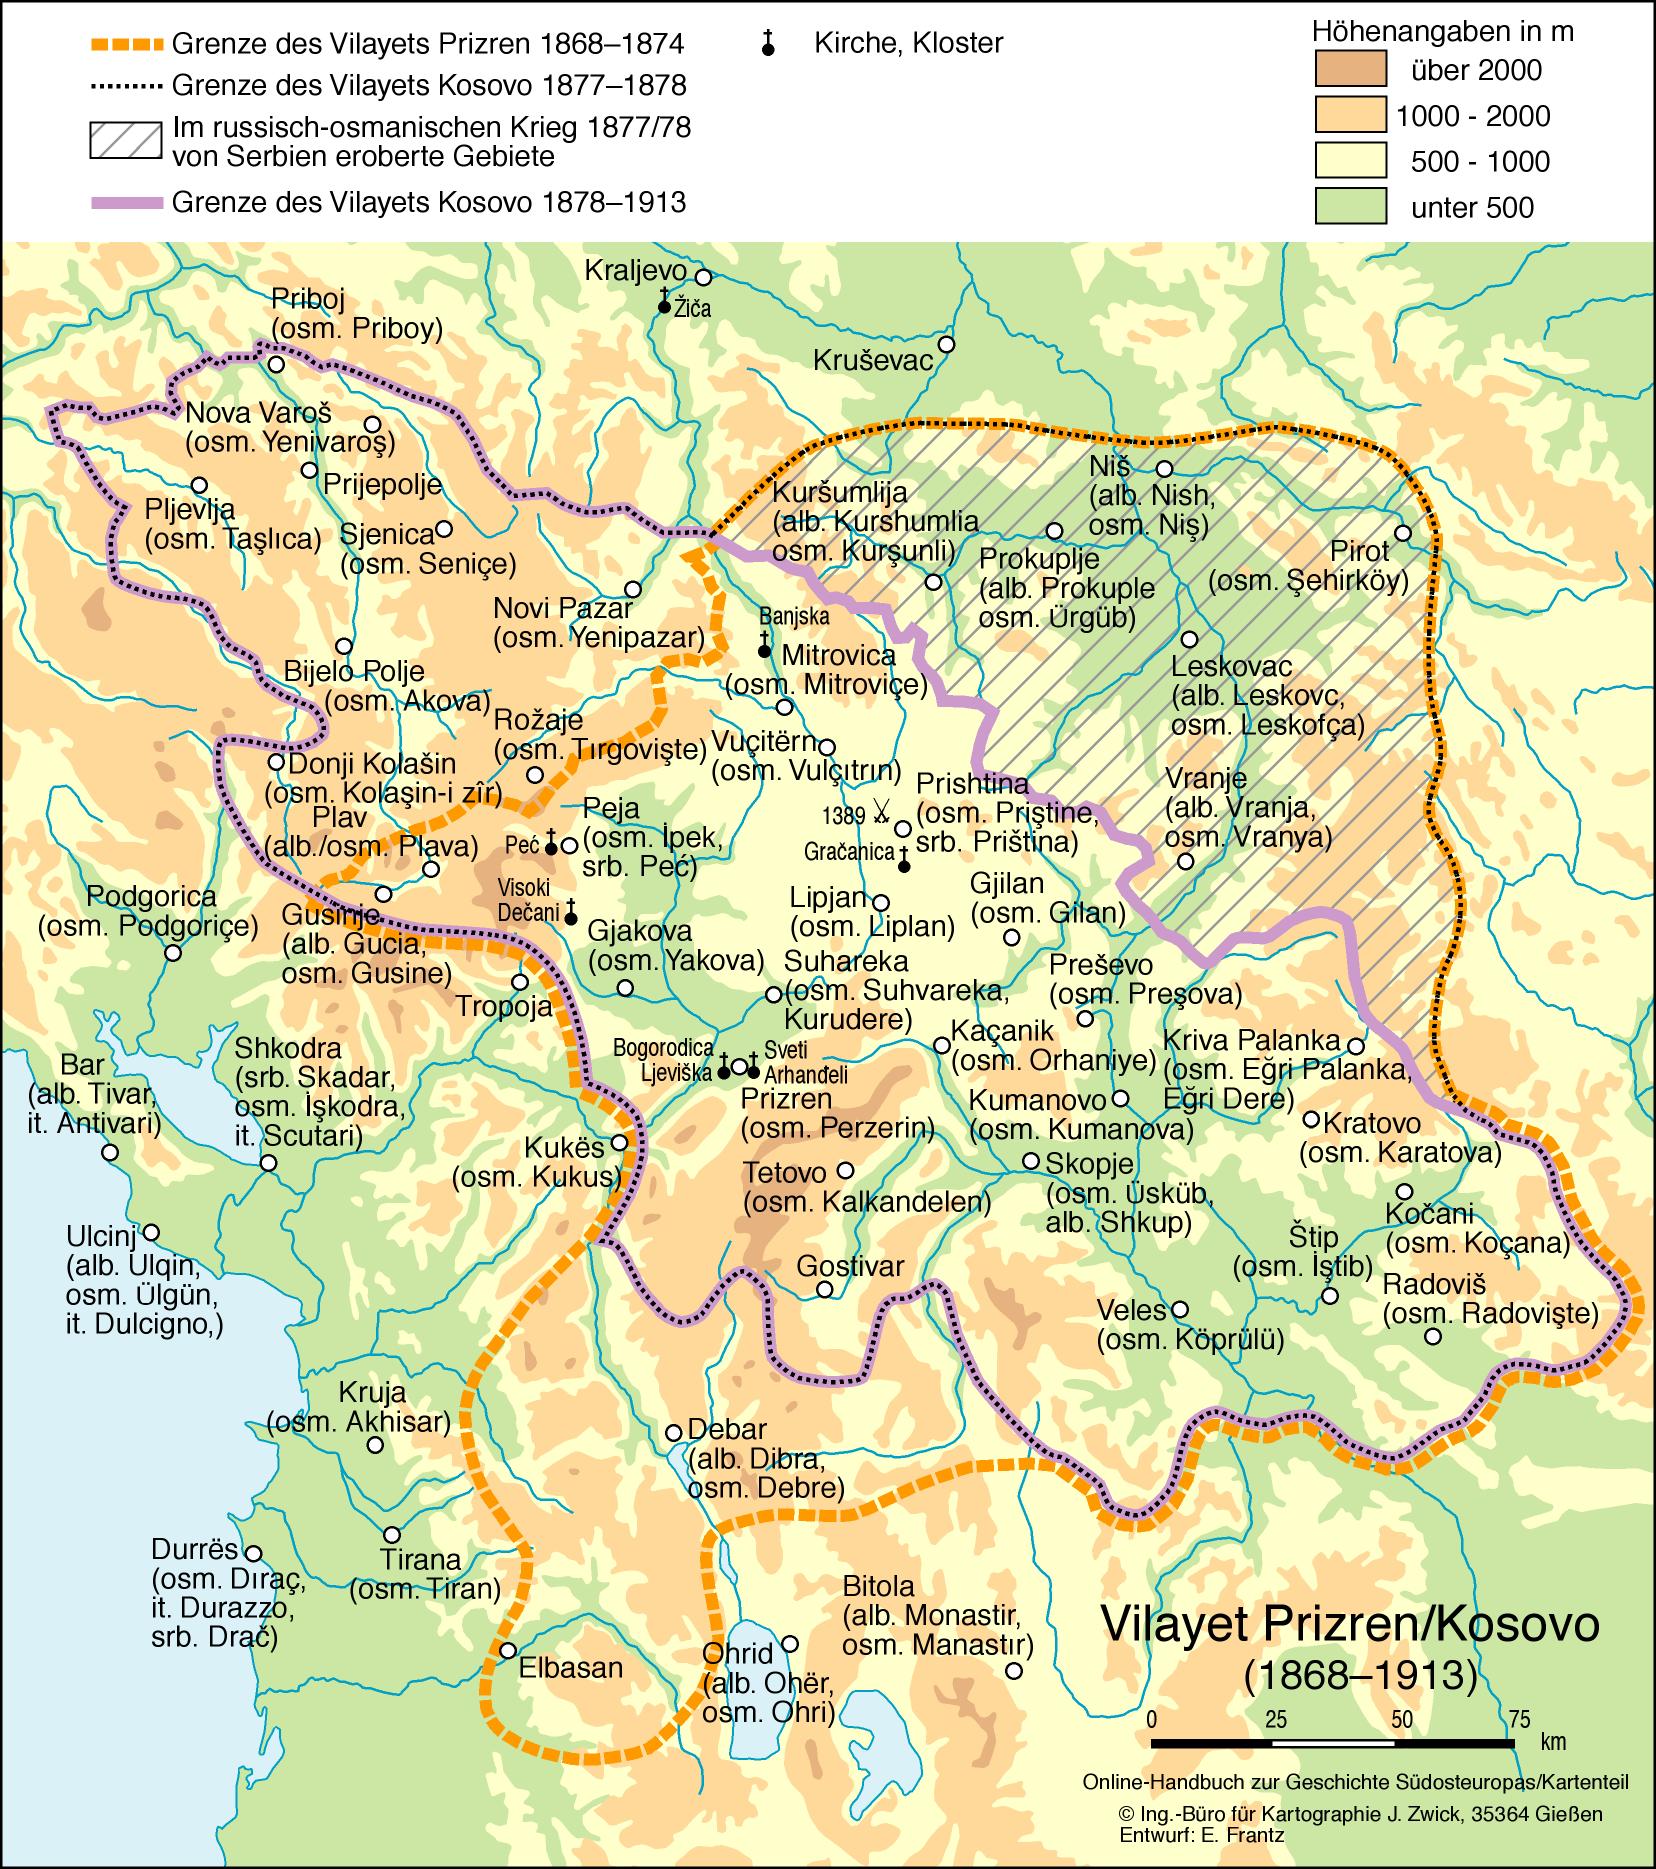 Vilayet Prizren/Kosovo (1868-1913)